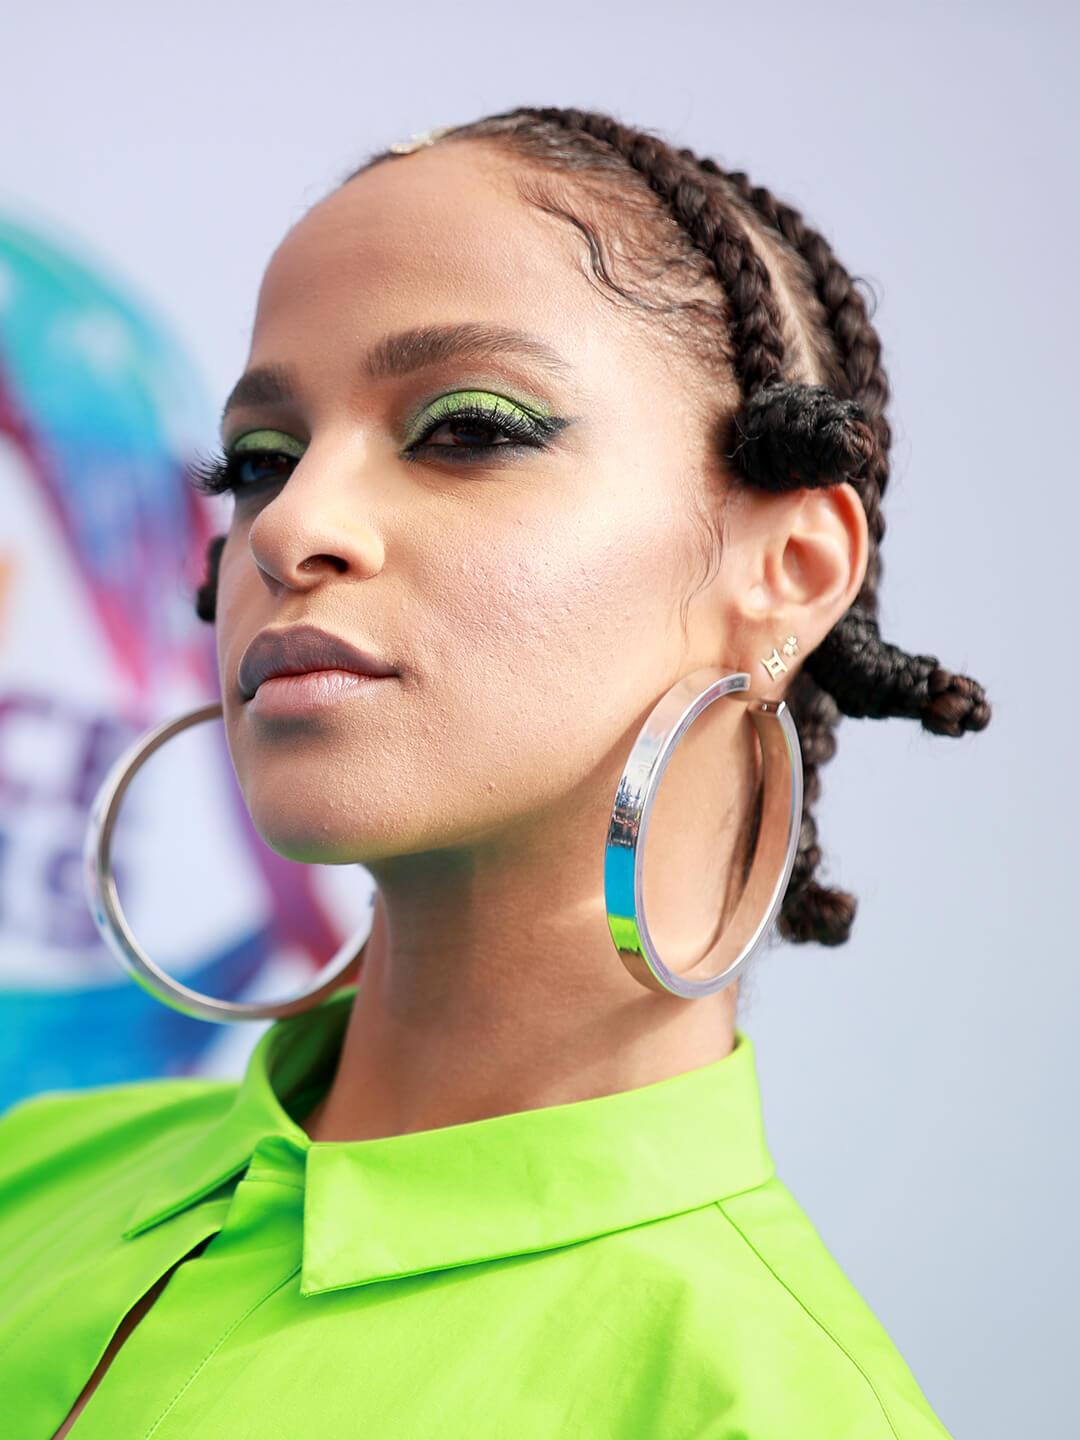 Megalyn Echikunwoke in a neon green outfit rocking a braided space bun hairstyle and big hoop earrings